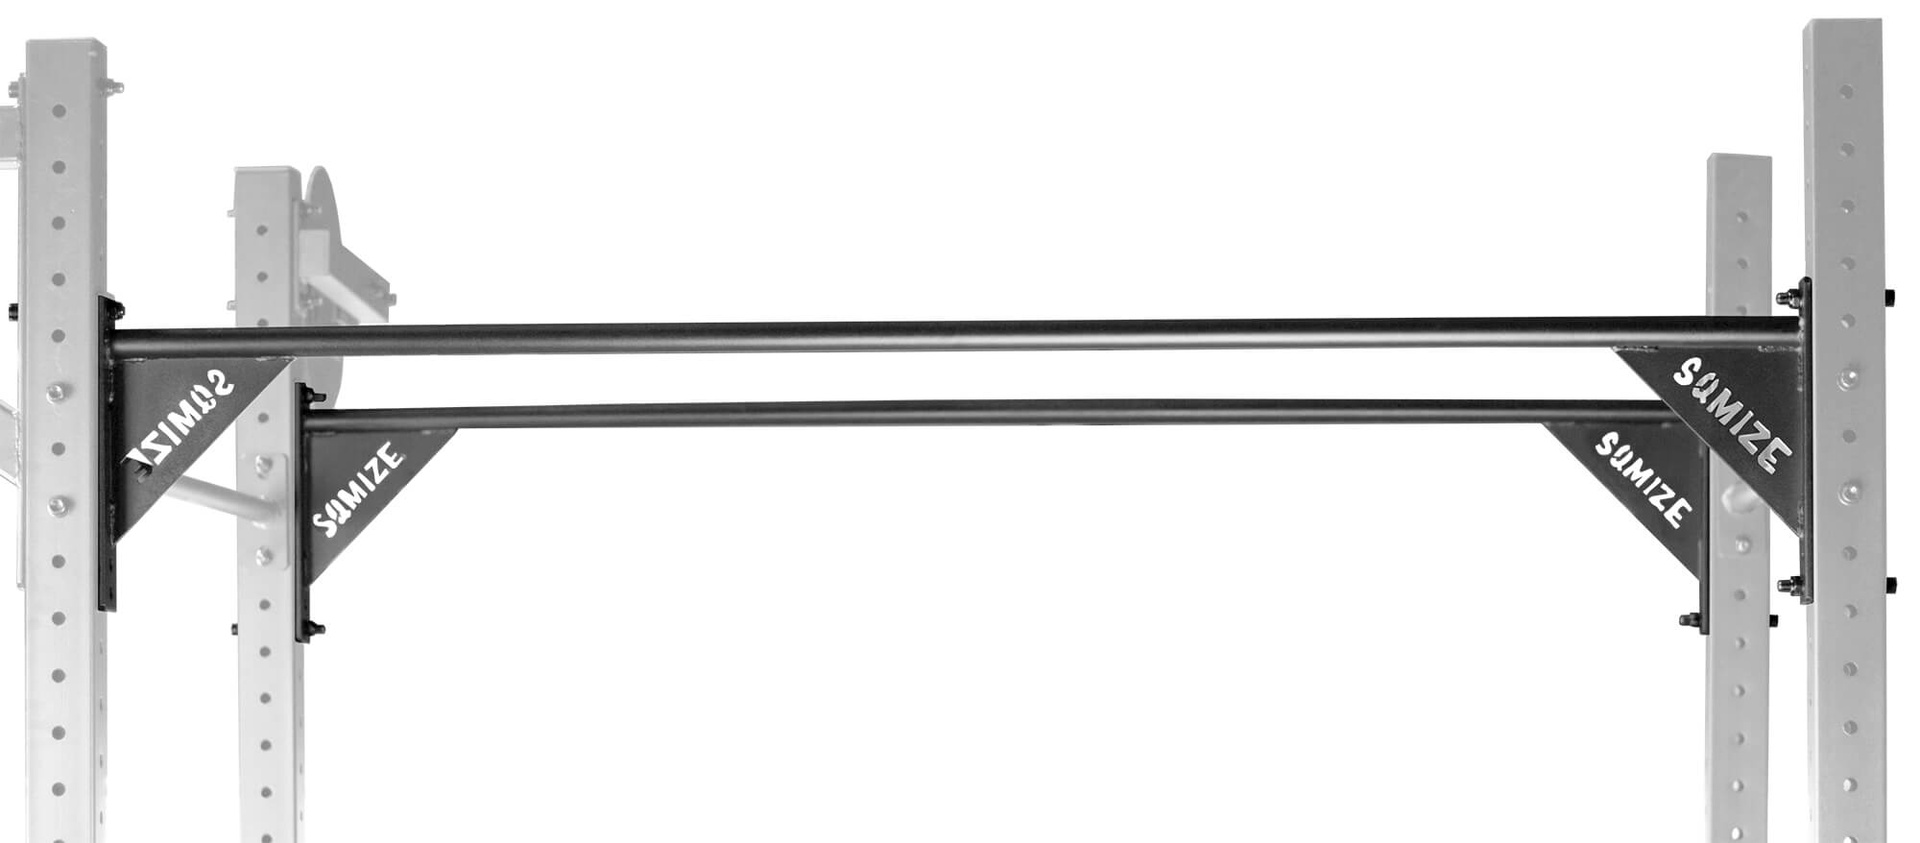 SQMIZE® Pull-Up Bar MR-S6 FV, 180 cm, Outdoor